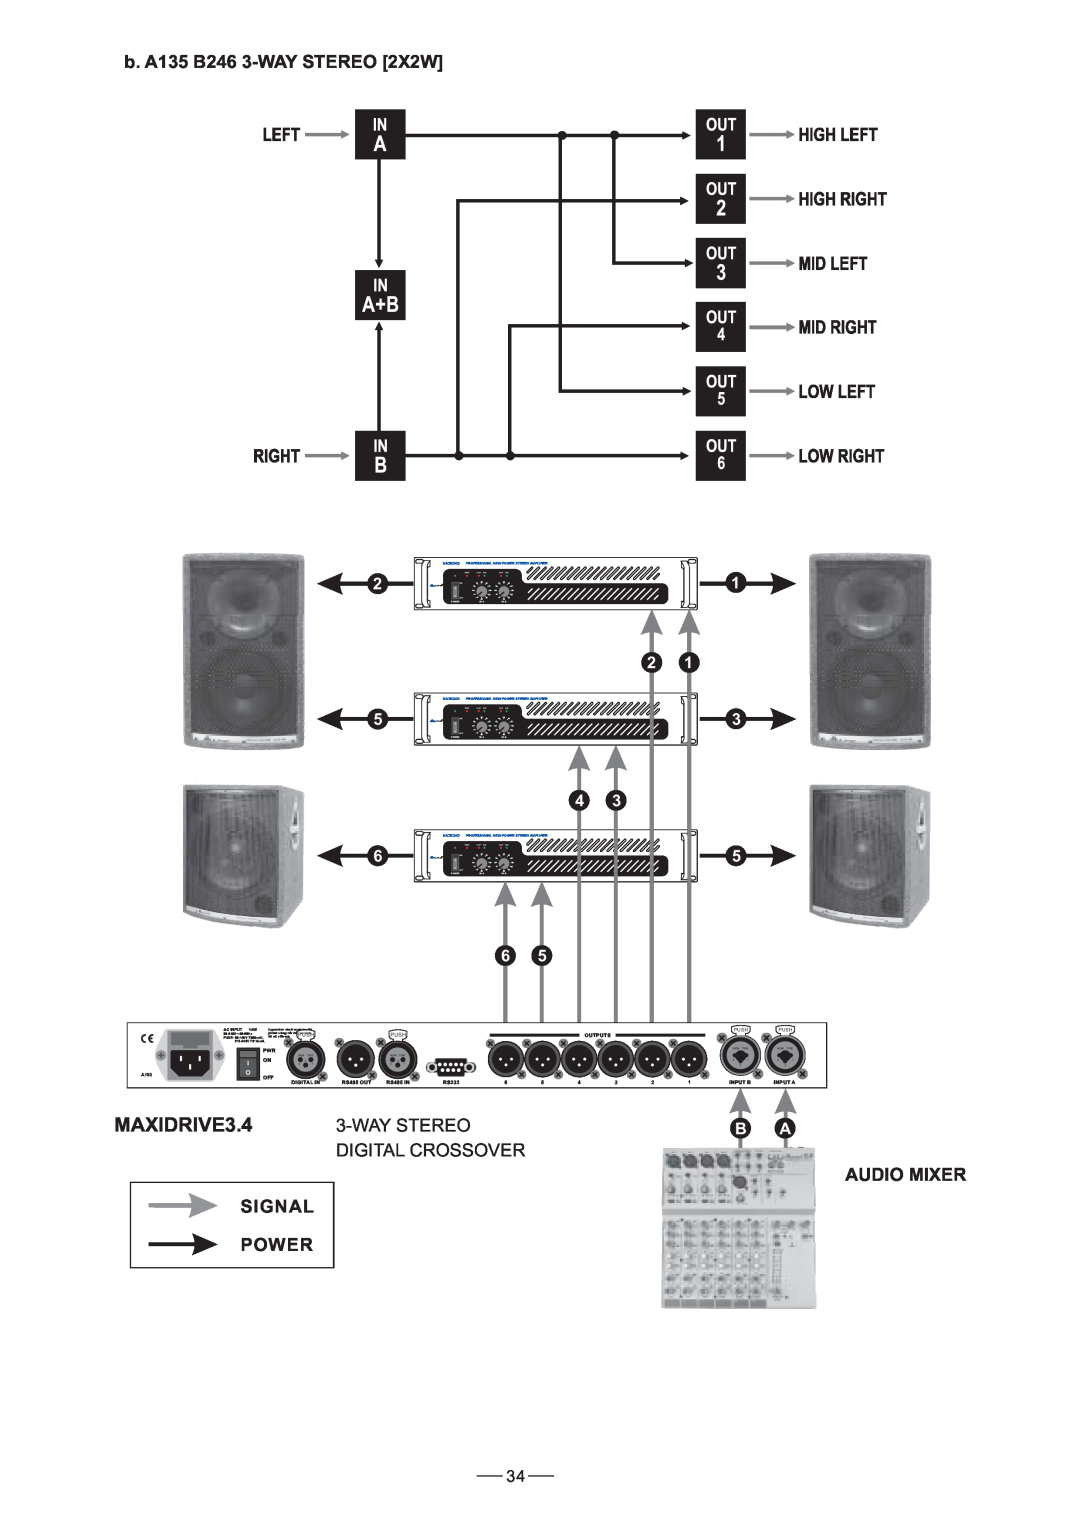 Nilfisk-ALTO user manual MAXIDRIVE3.4, b. A135 B246 3-WAYSTEREO 2X2W, Audio Mixer Signal Power 